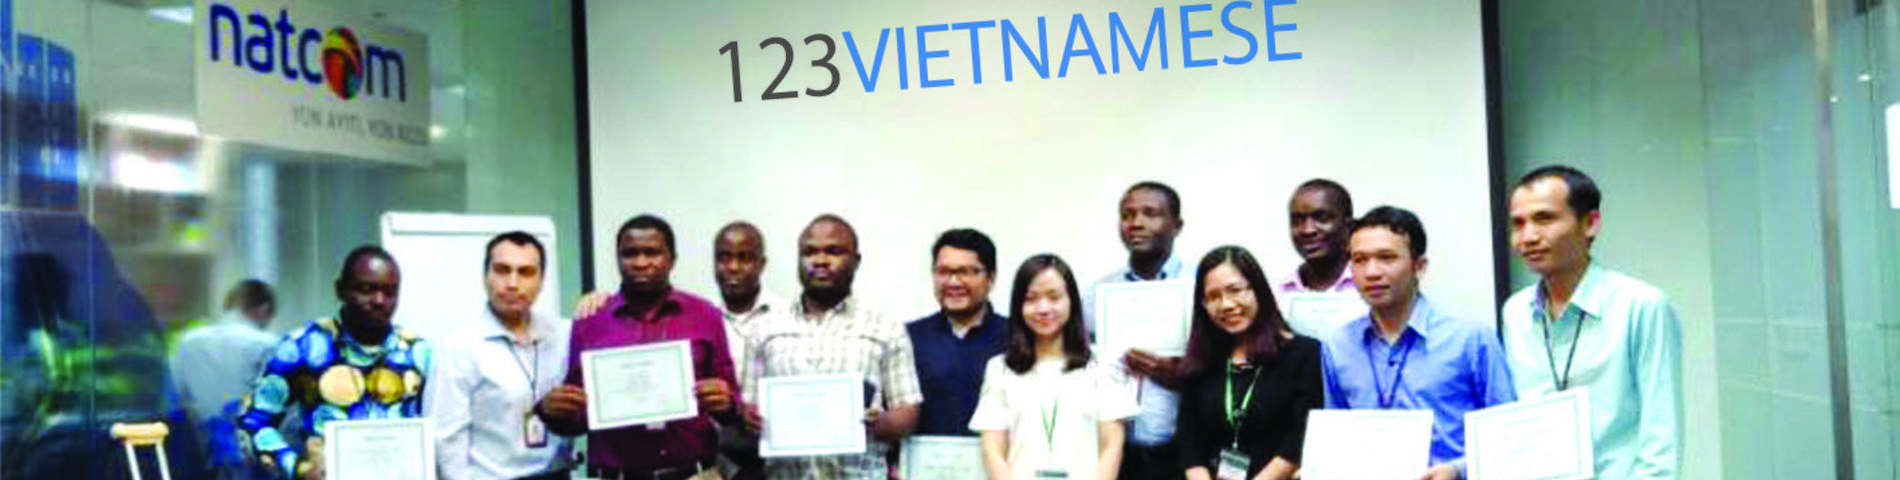 123 Vietnamese Center bild 1